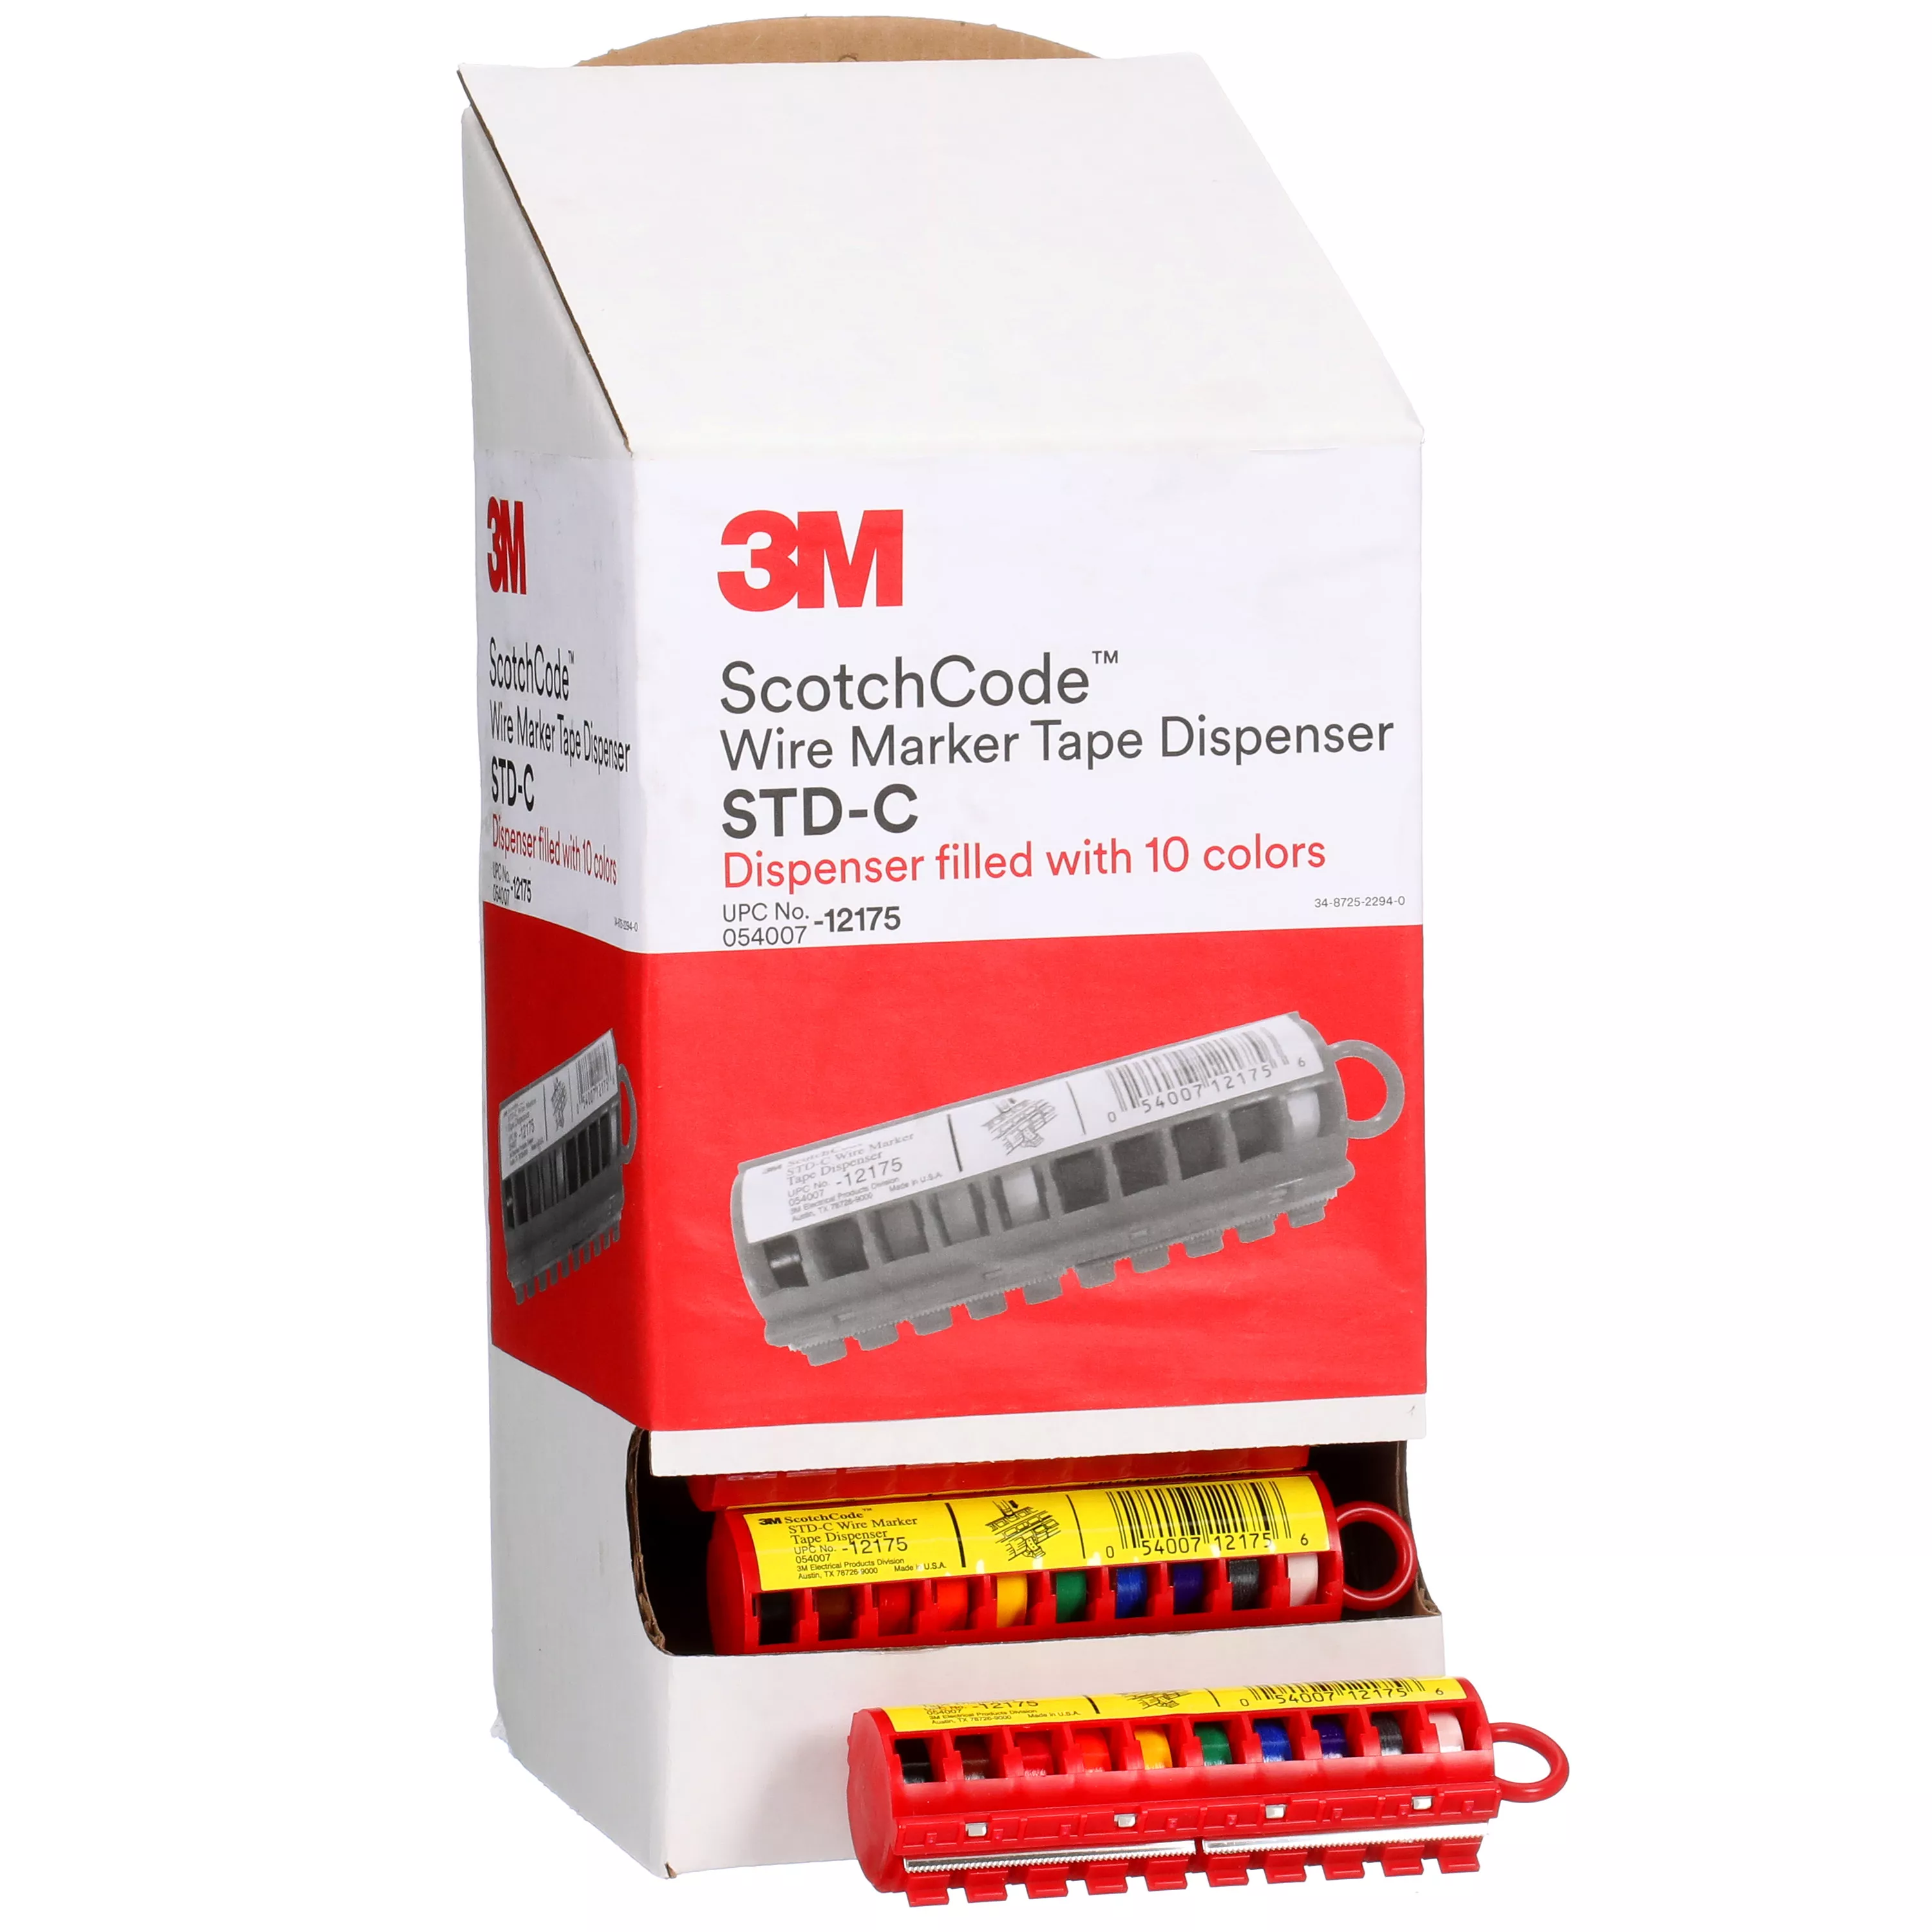 SKU 7000031515 | 3M™ ScotchCode™ Wire Marker Tape Dispenser with Tape STD-C